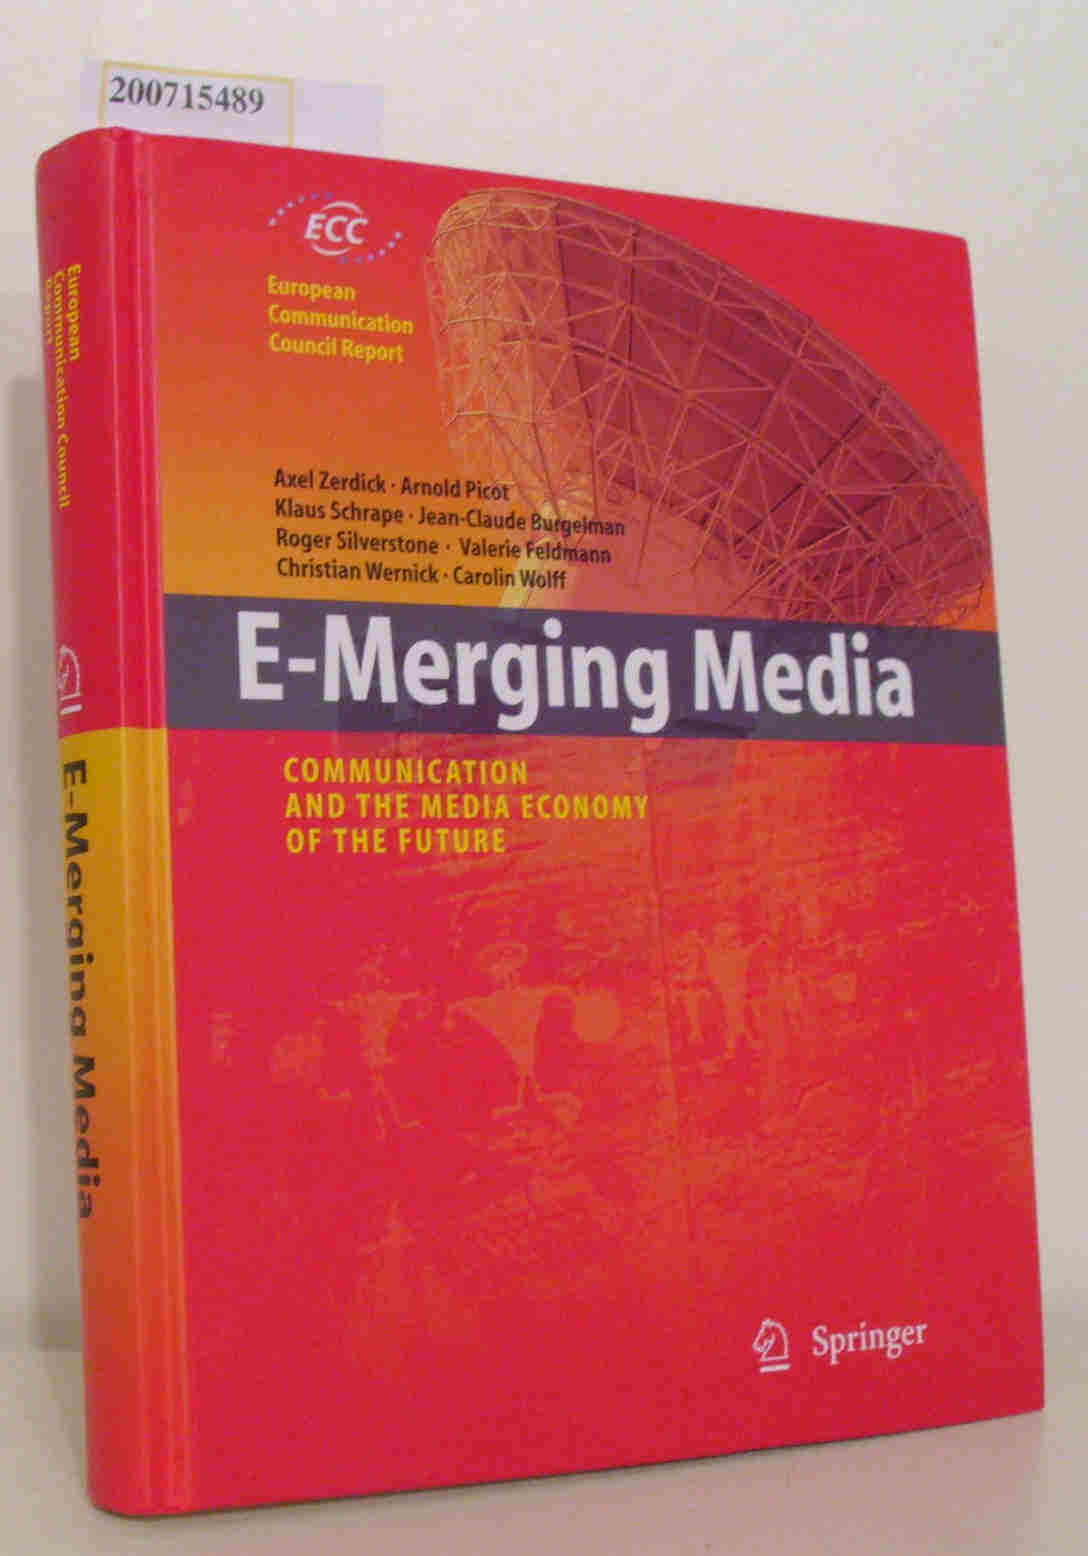 E-merging media communication and the media economy of the future - Zerdick, Axel   Glasgow, Rupert [Übers.]